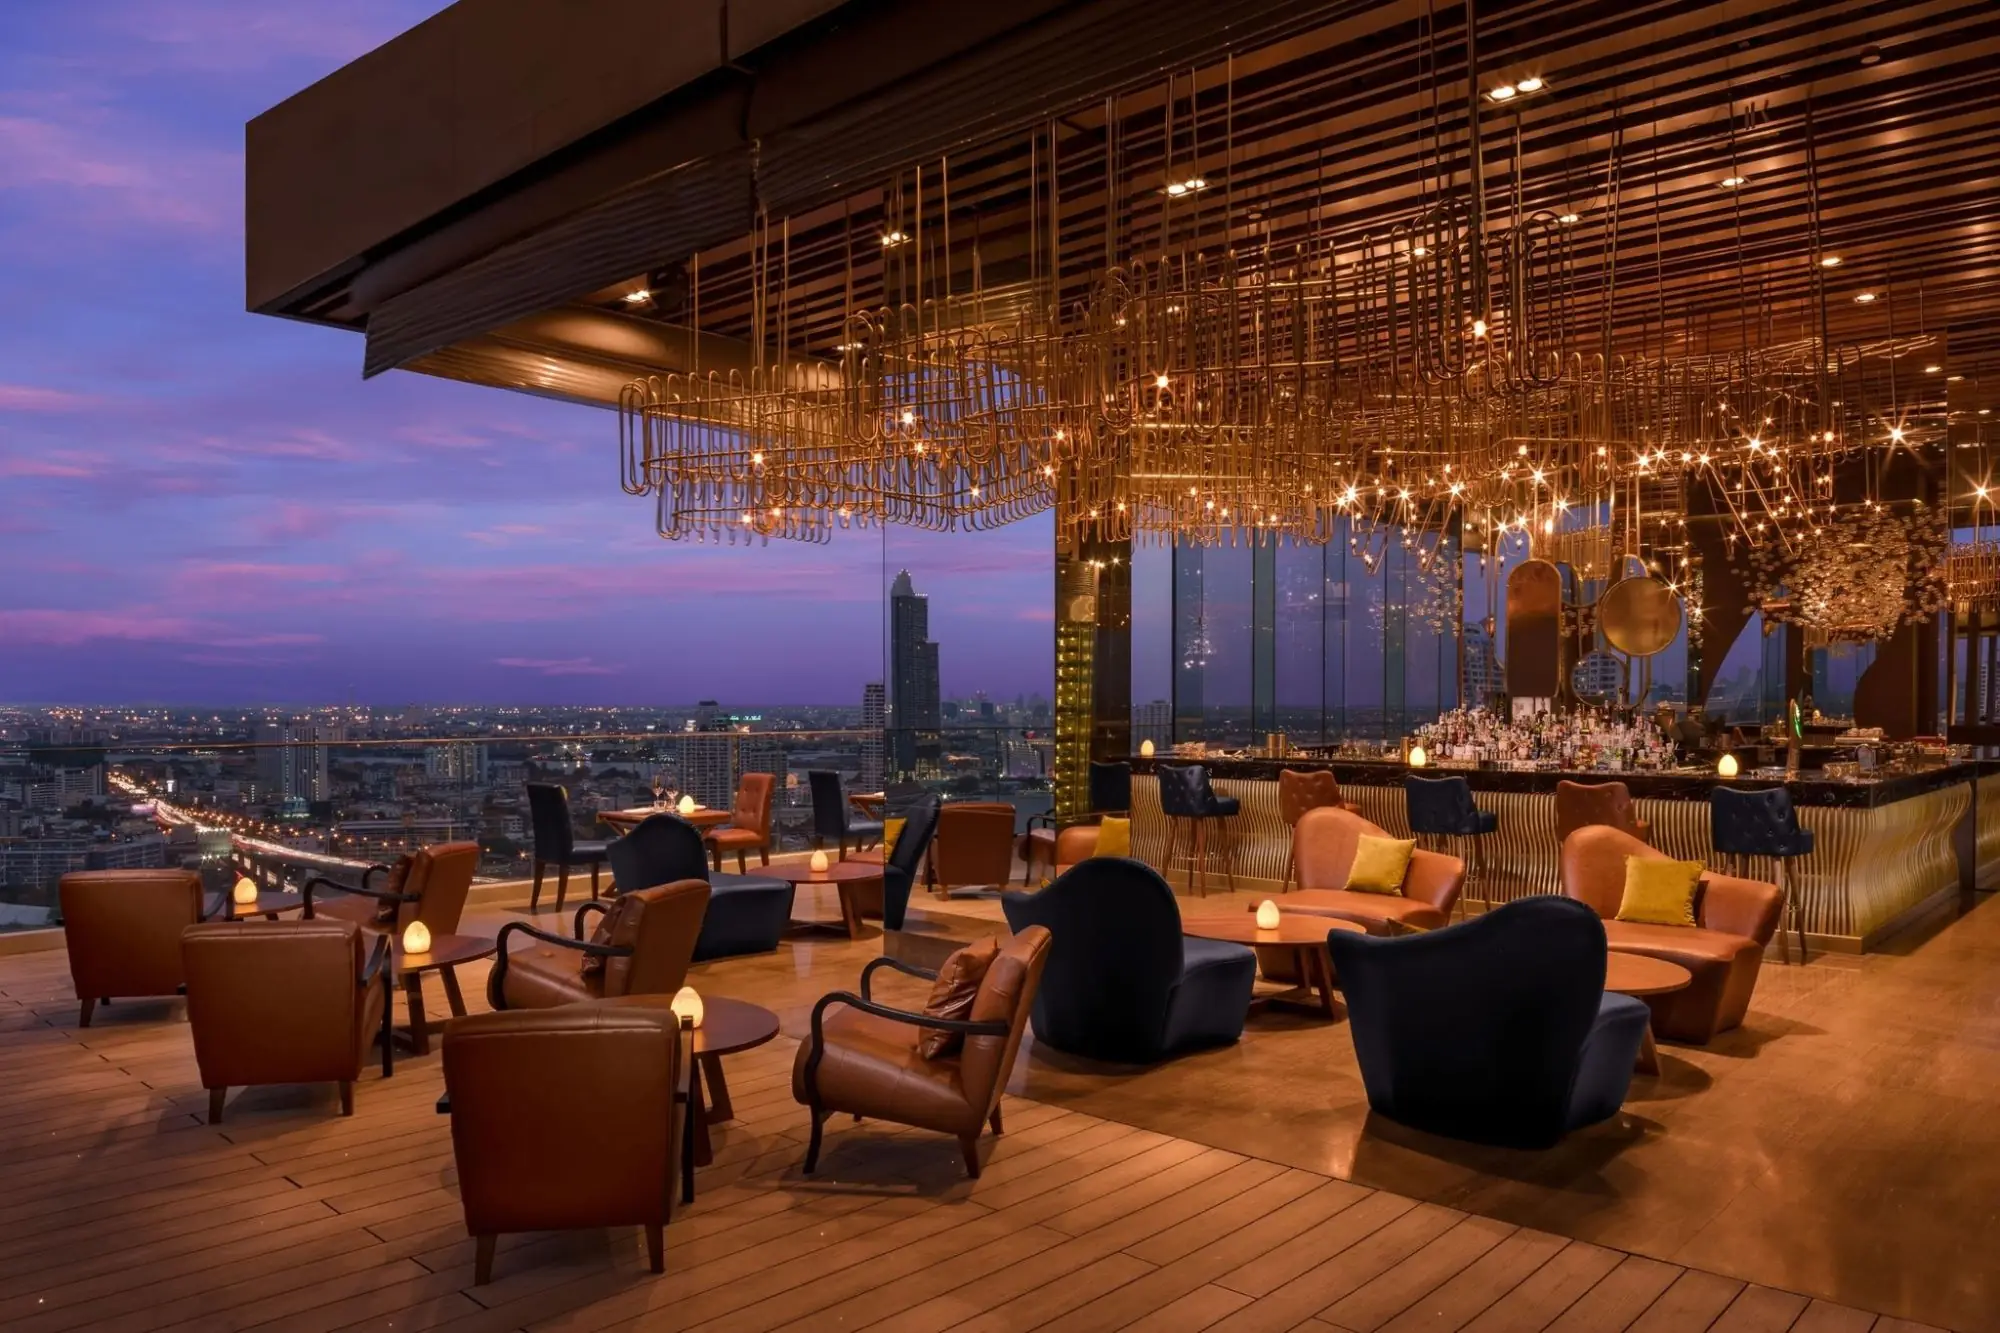 SEEN Restaurant & Bar Bangkok是曼谷赏河景＋夜景的最佳选择（图片来源：SEEN Restaurant & Bar Bangkok FB）